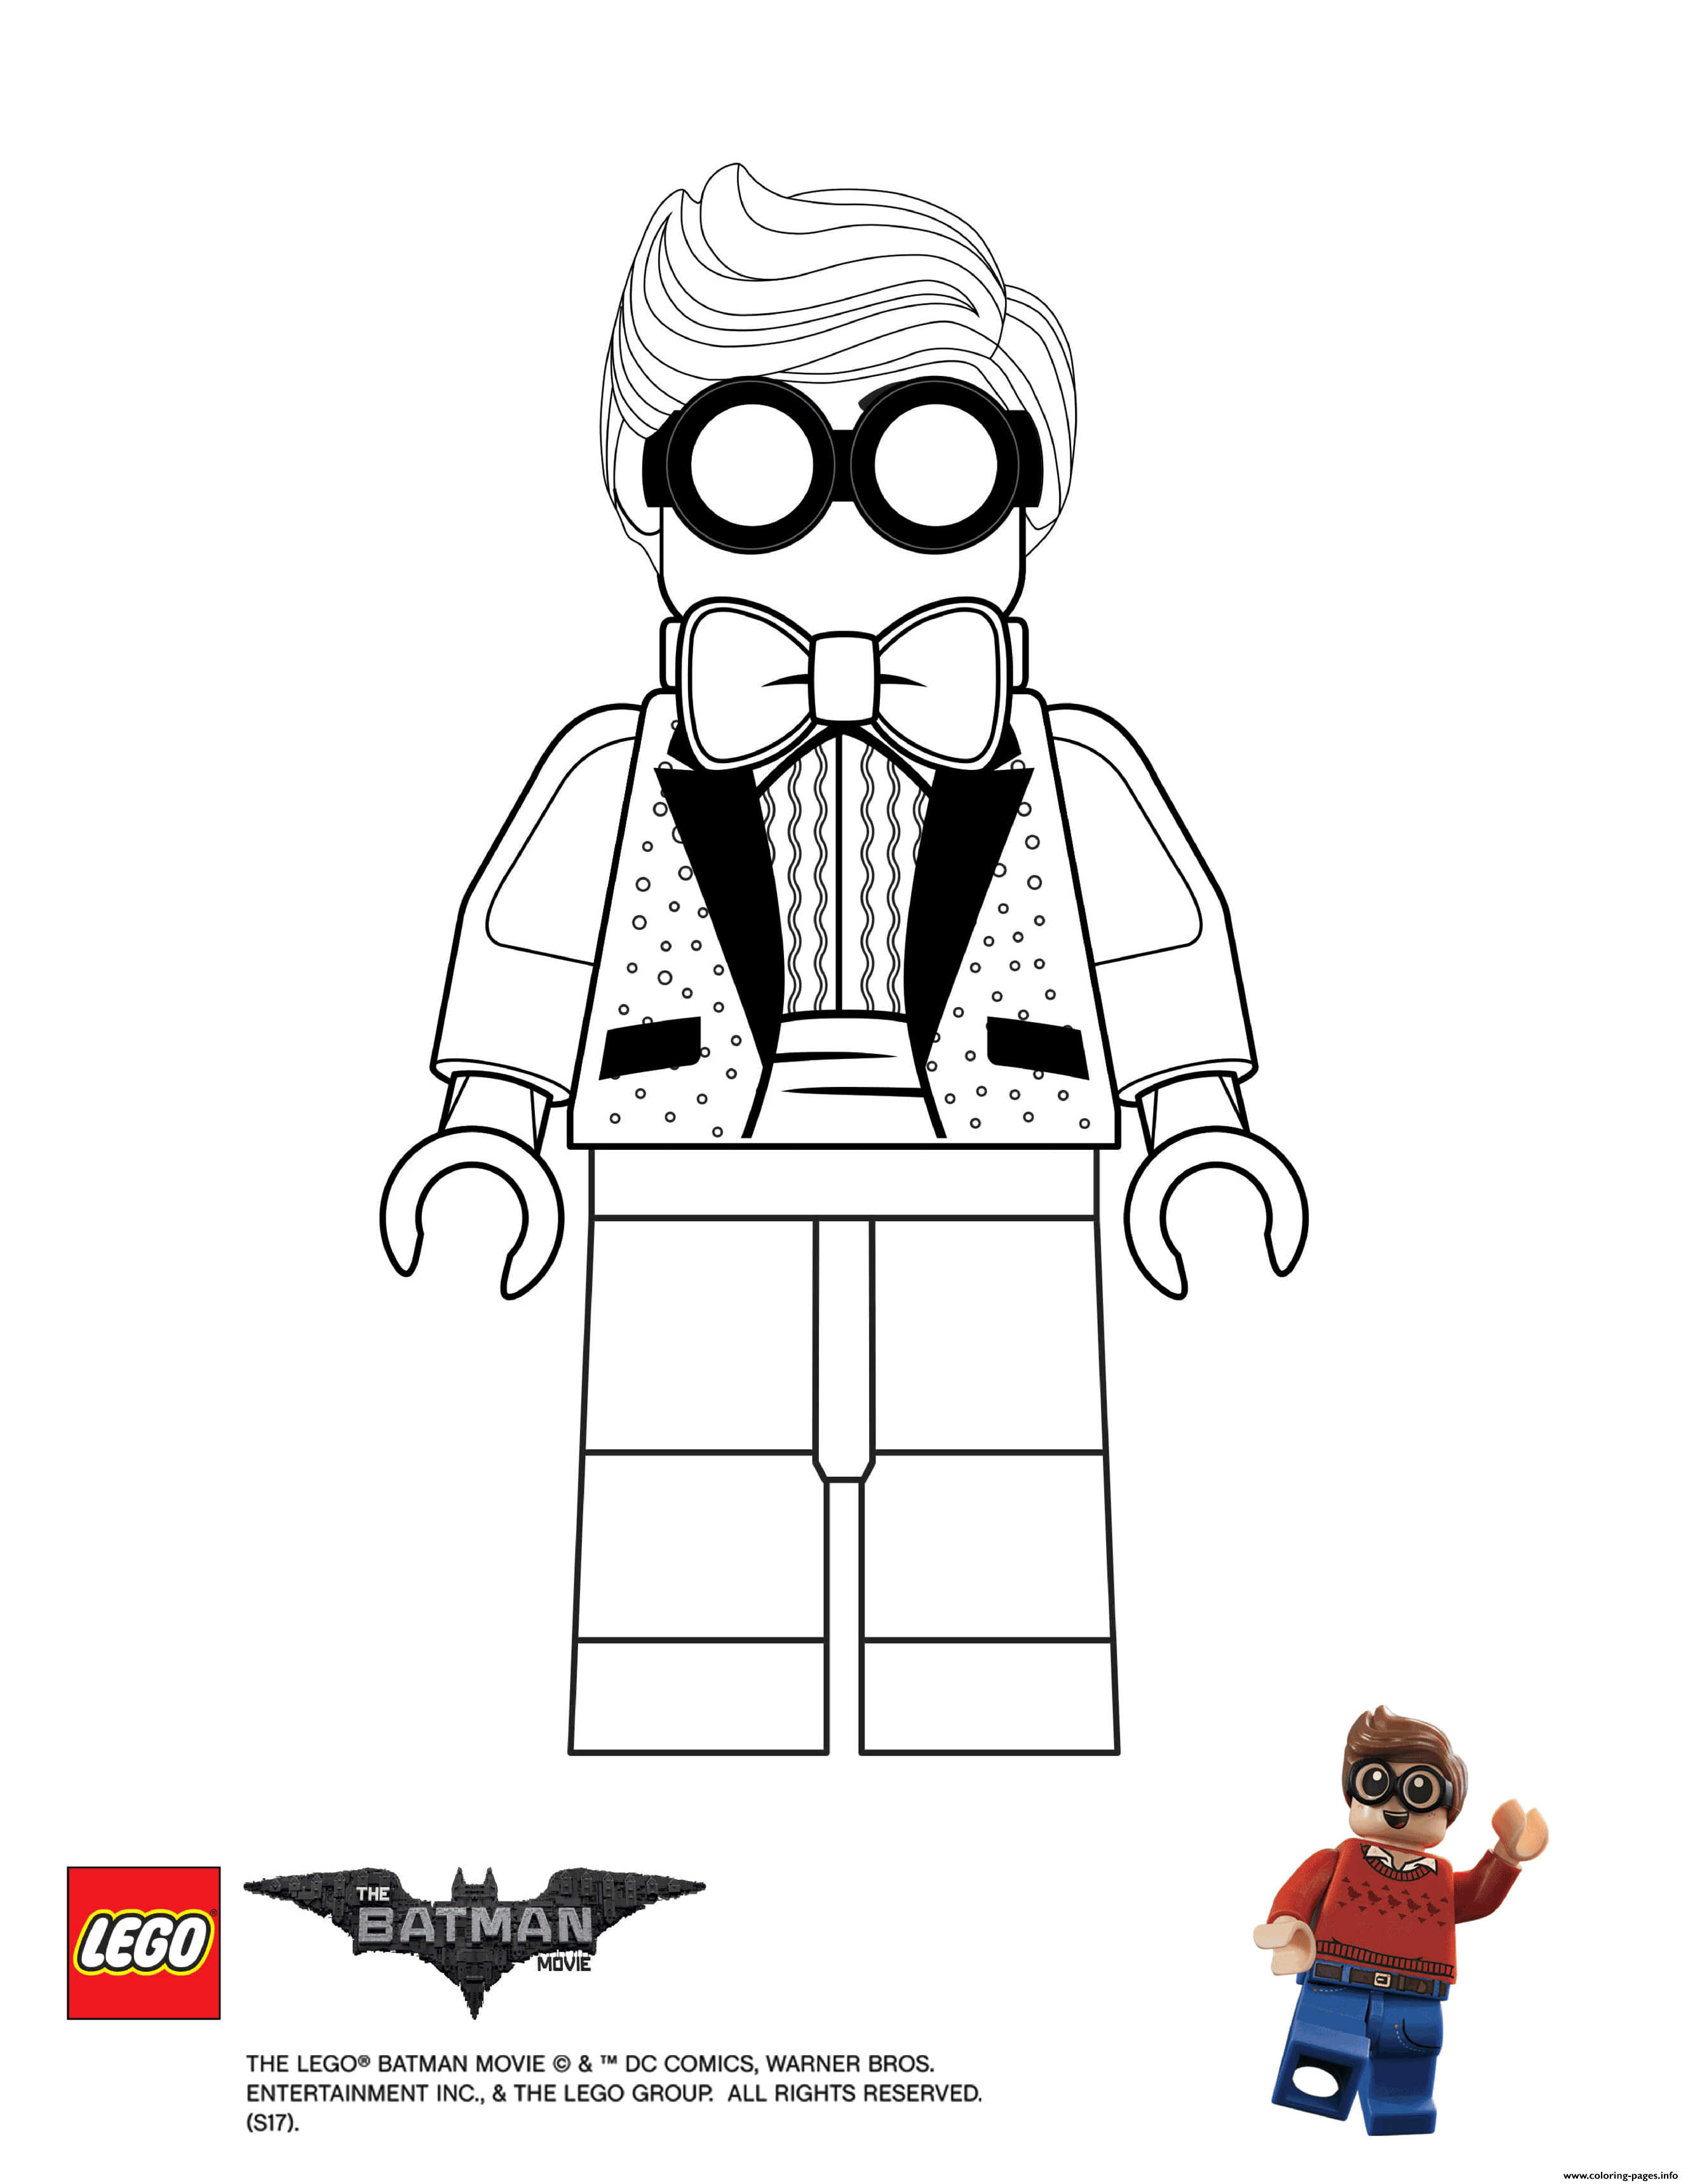 Dick Grayson Lego Batman Movie coloring